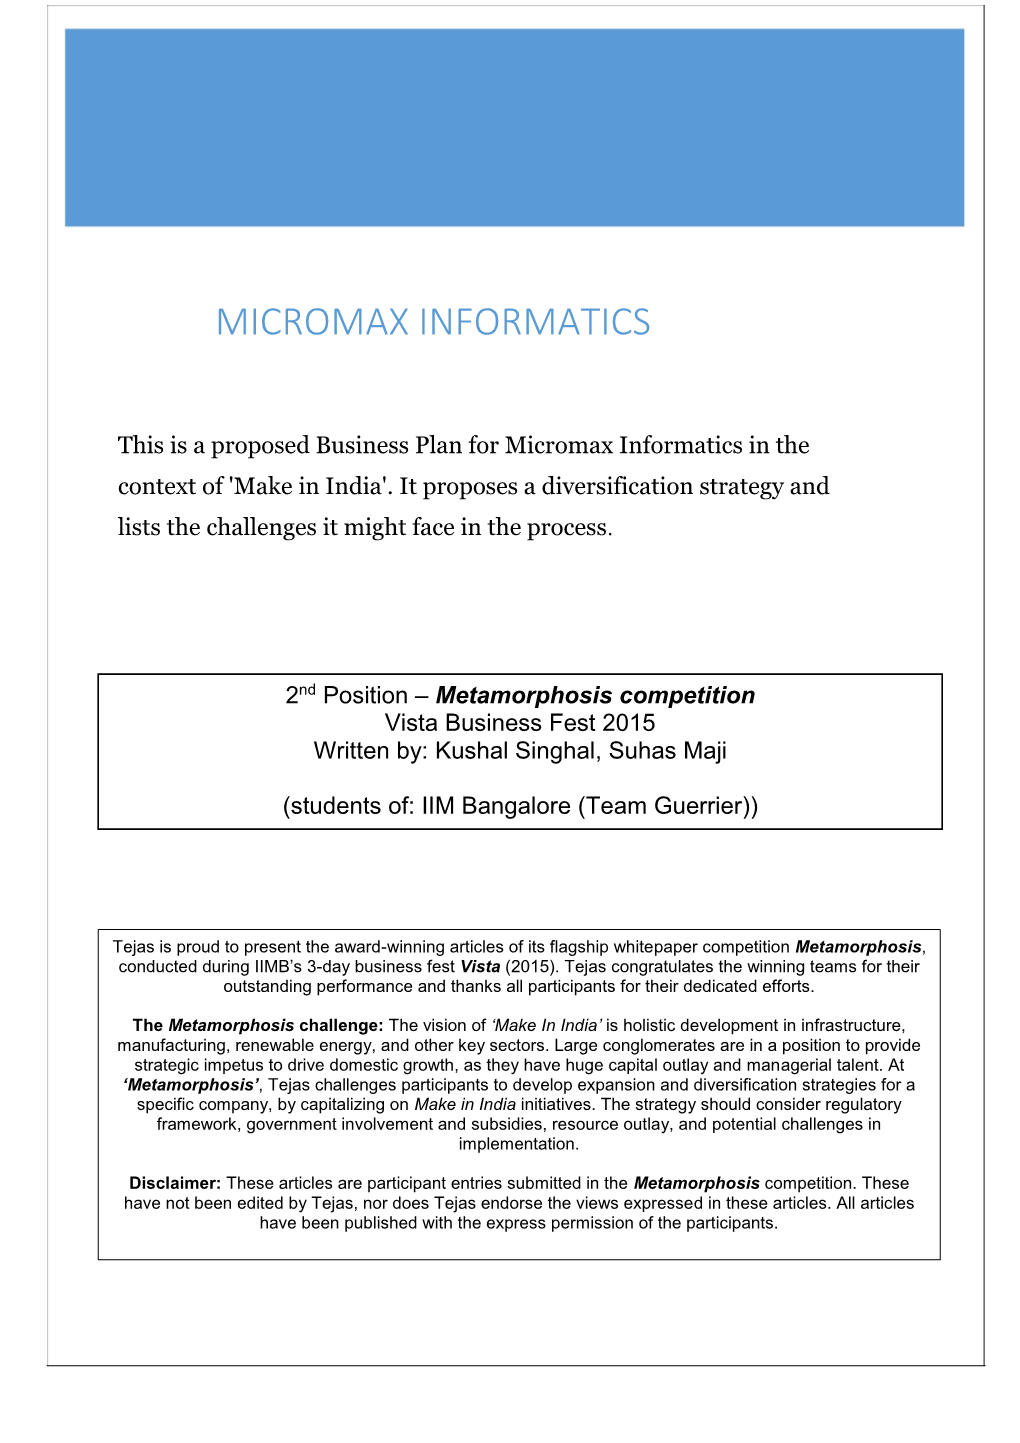 Micromax Informatics